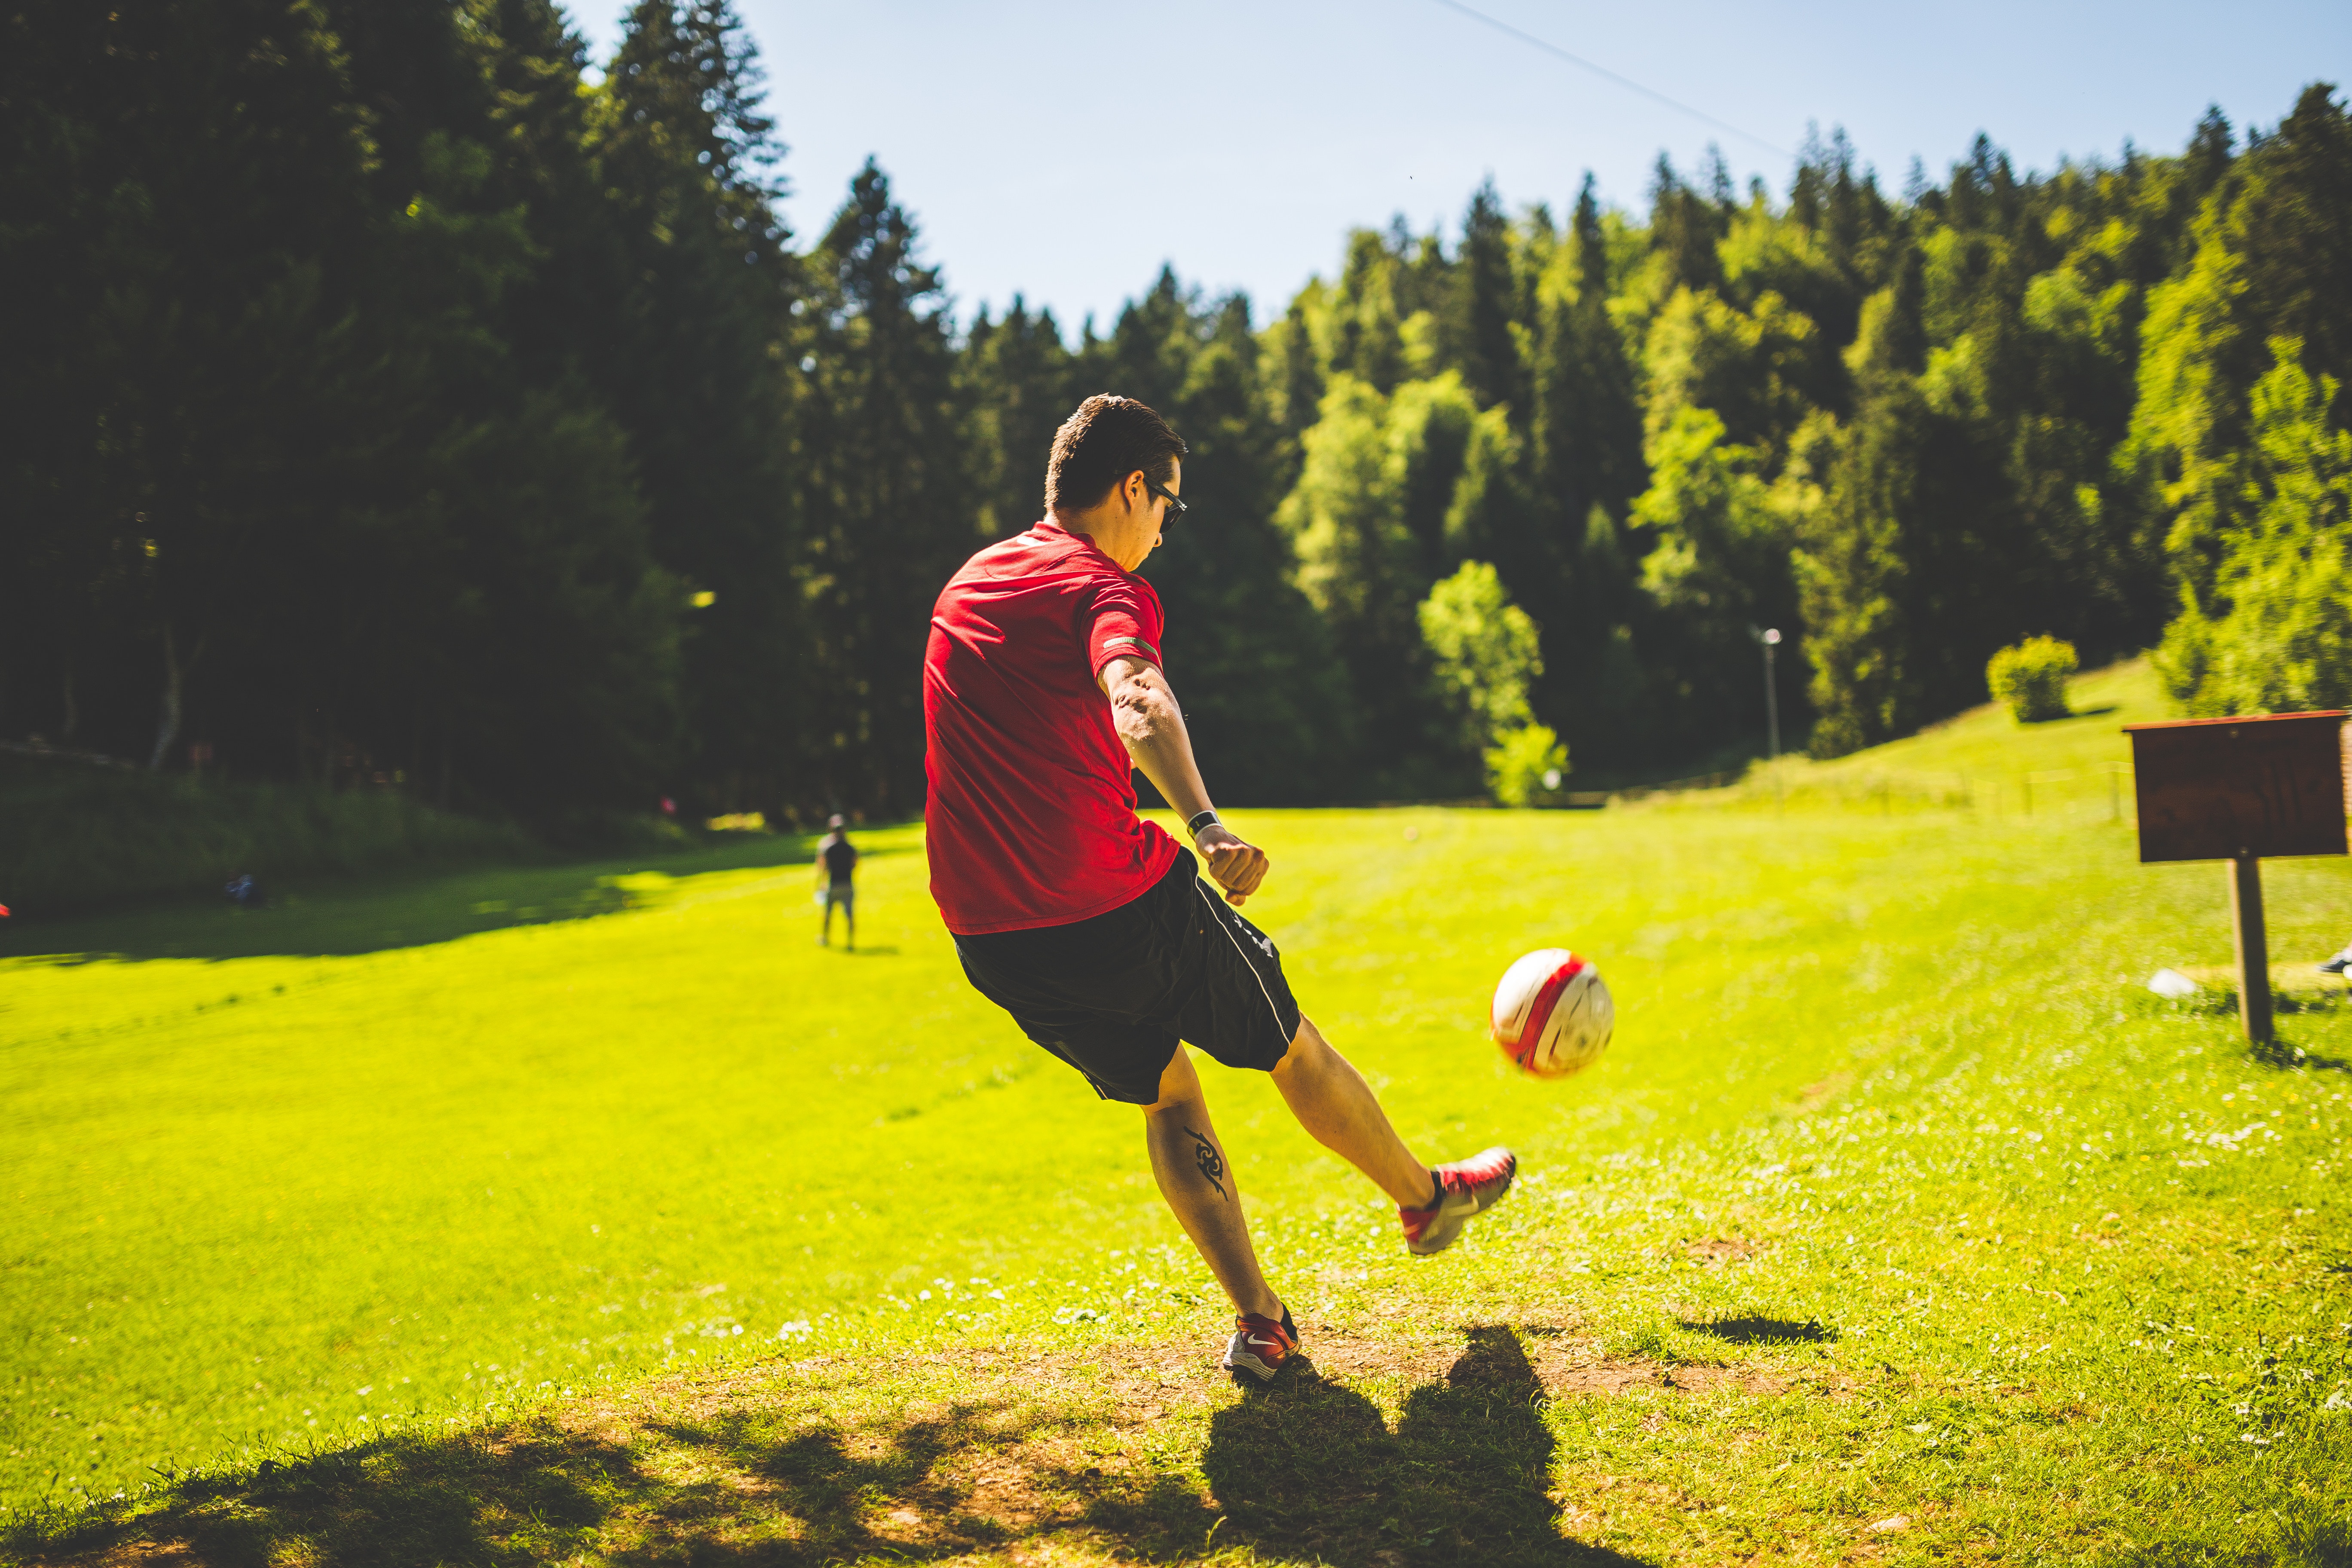 Игра мяч на траве. Парень с мячом. Футбол на природе. Парень с футбольным мячом. Увлечение спортом.